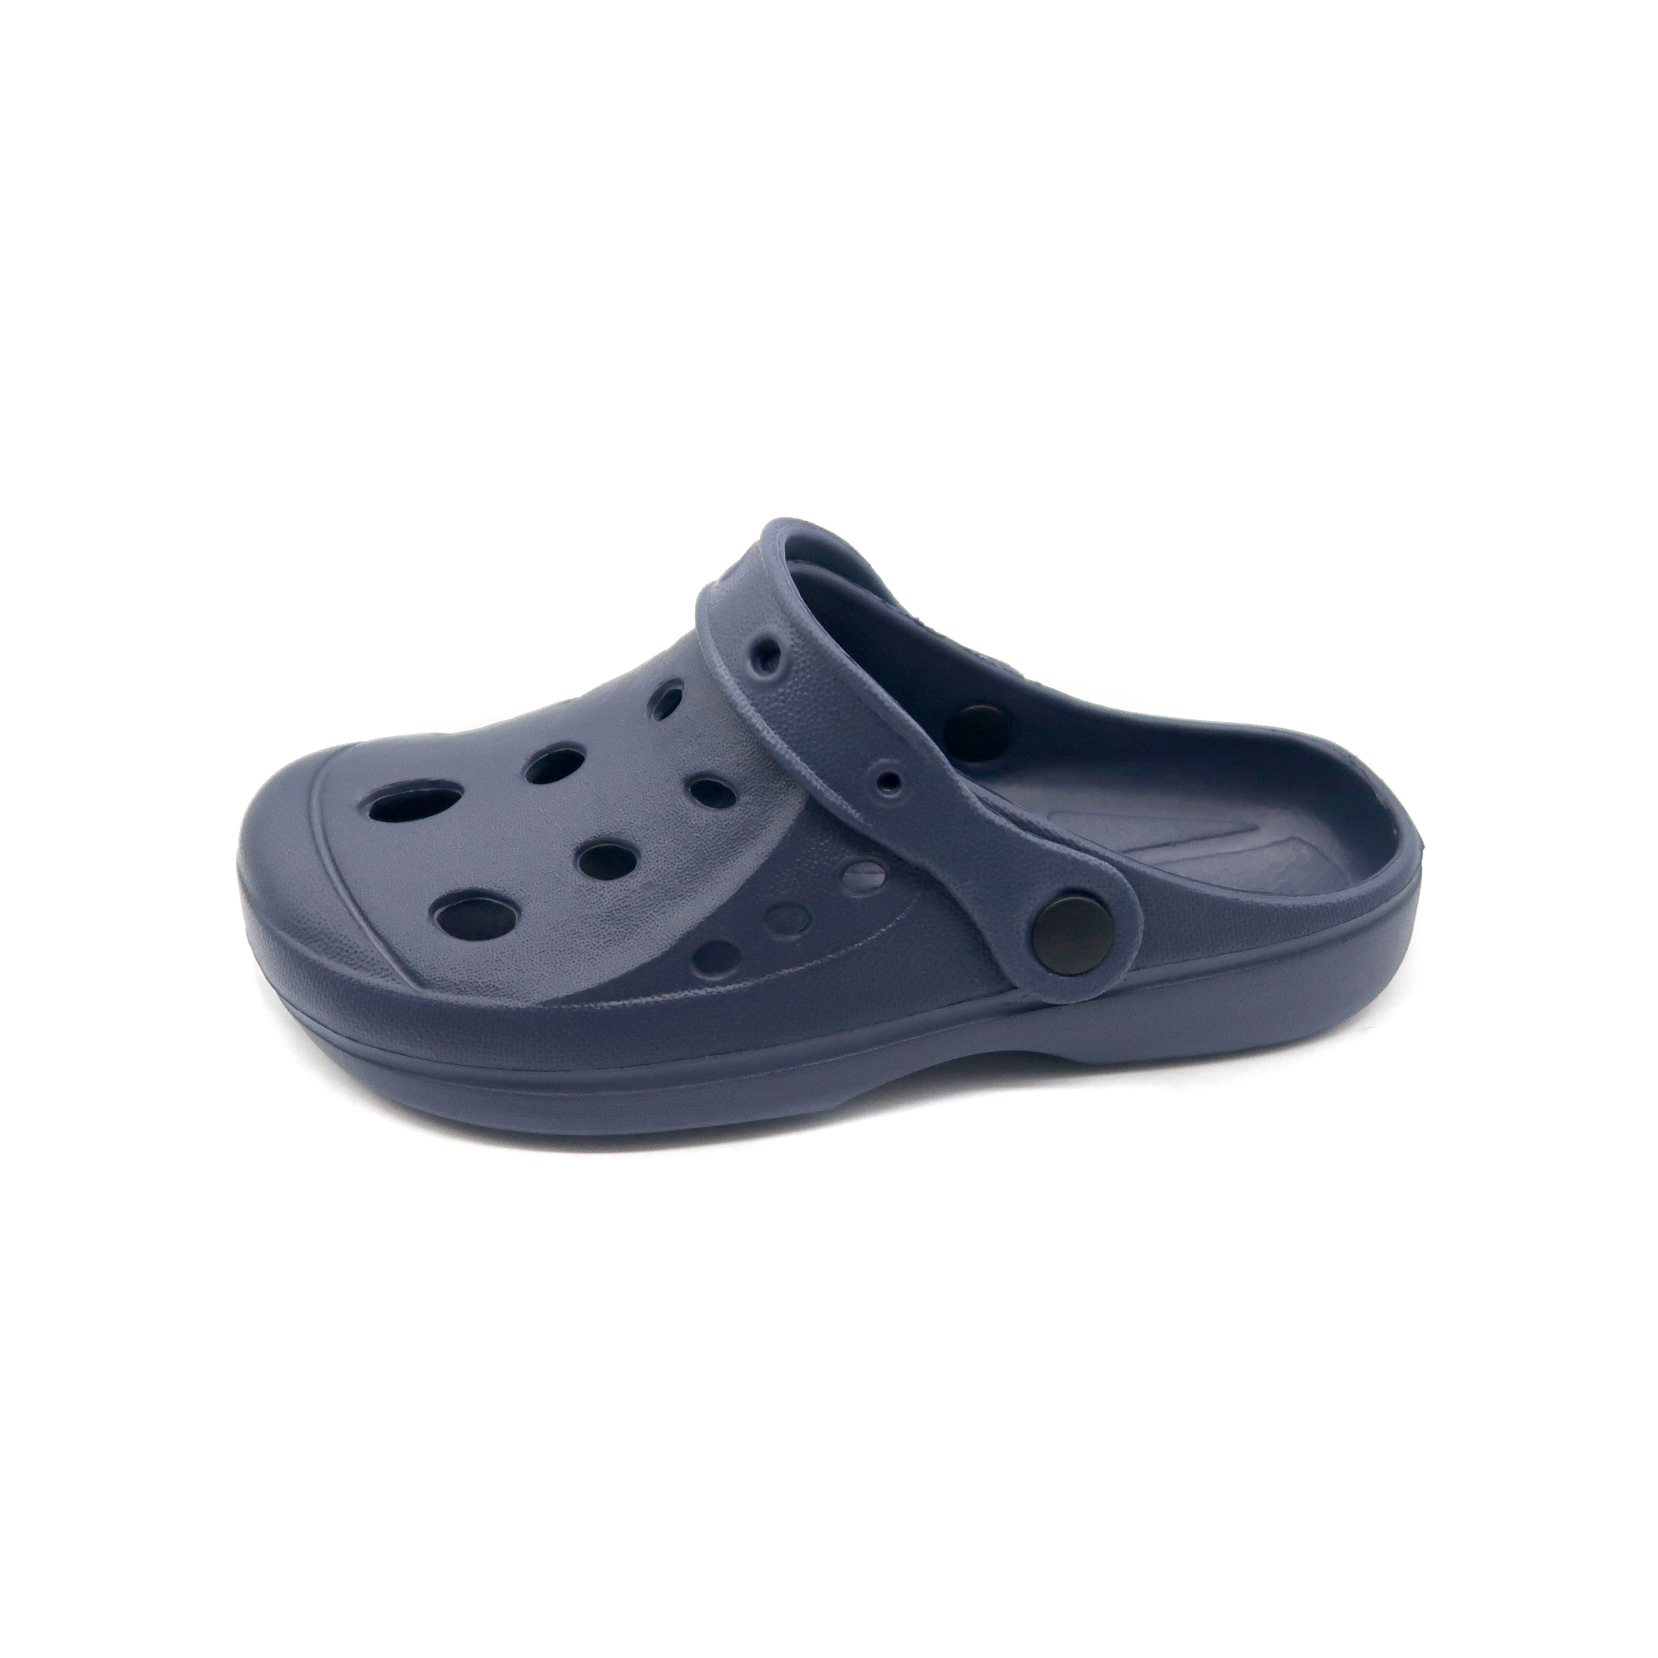 Fashion Clogs Man Soft Bottom Beach Sandals Female Clog Sandals Breathable Ankle-Wrap EVA Shoes For Women